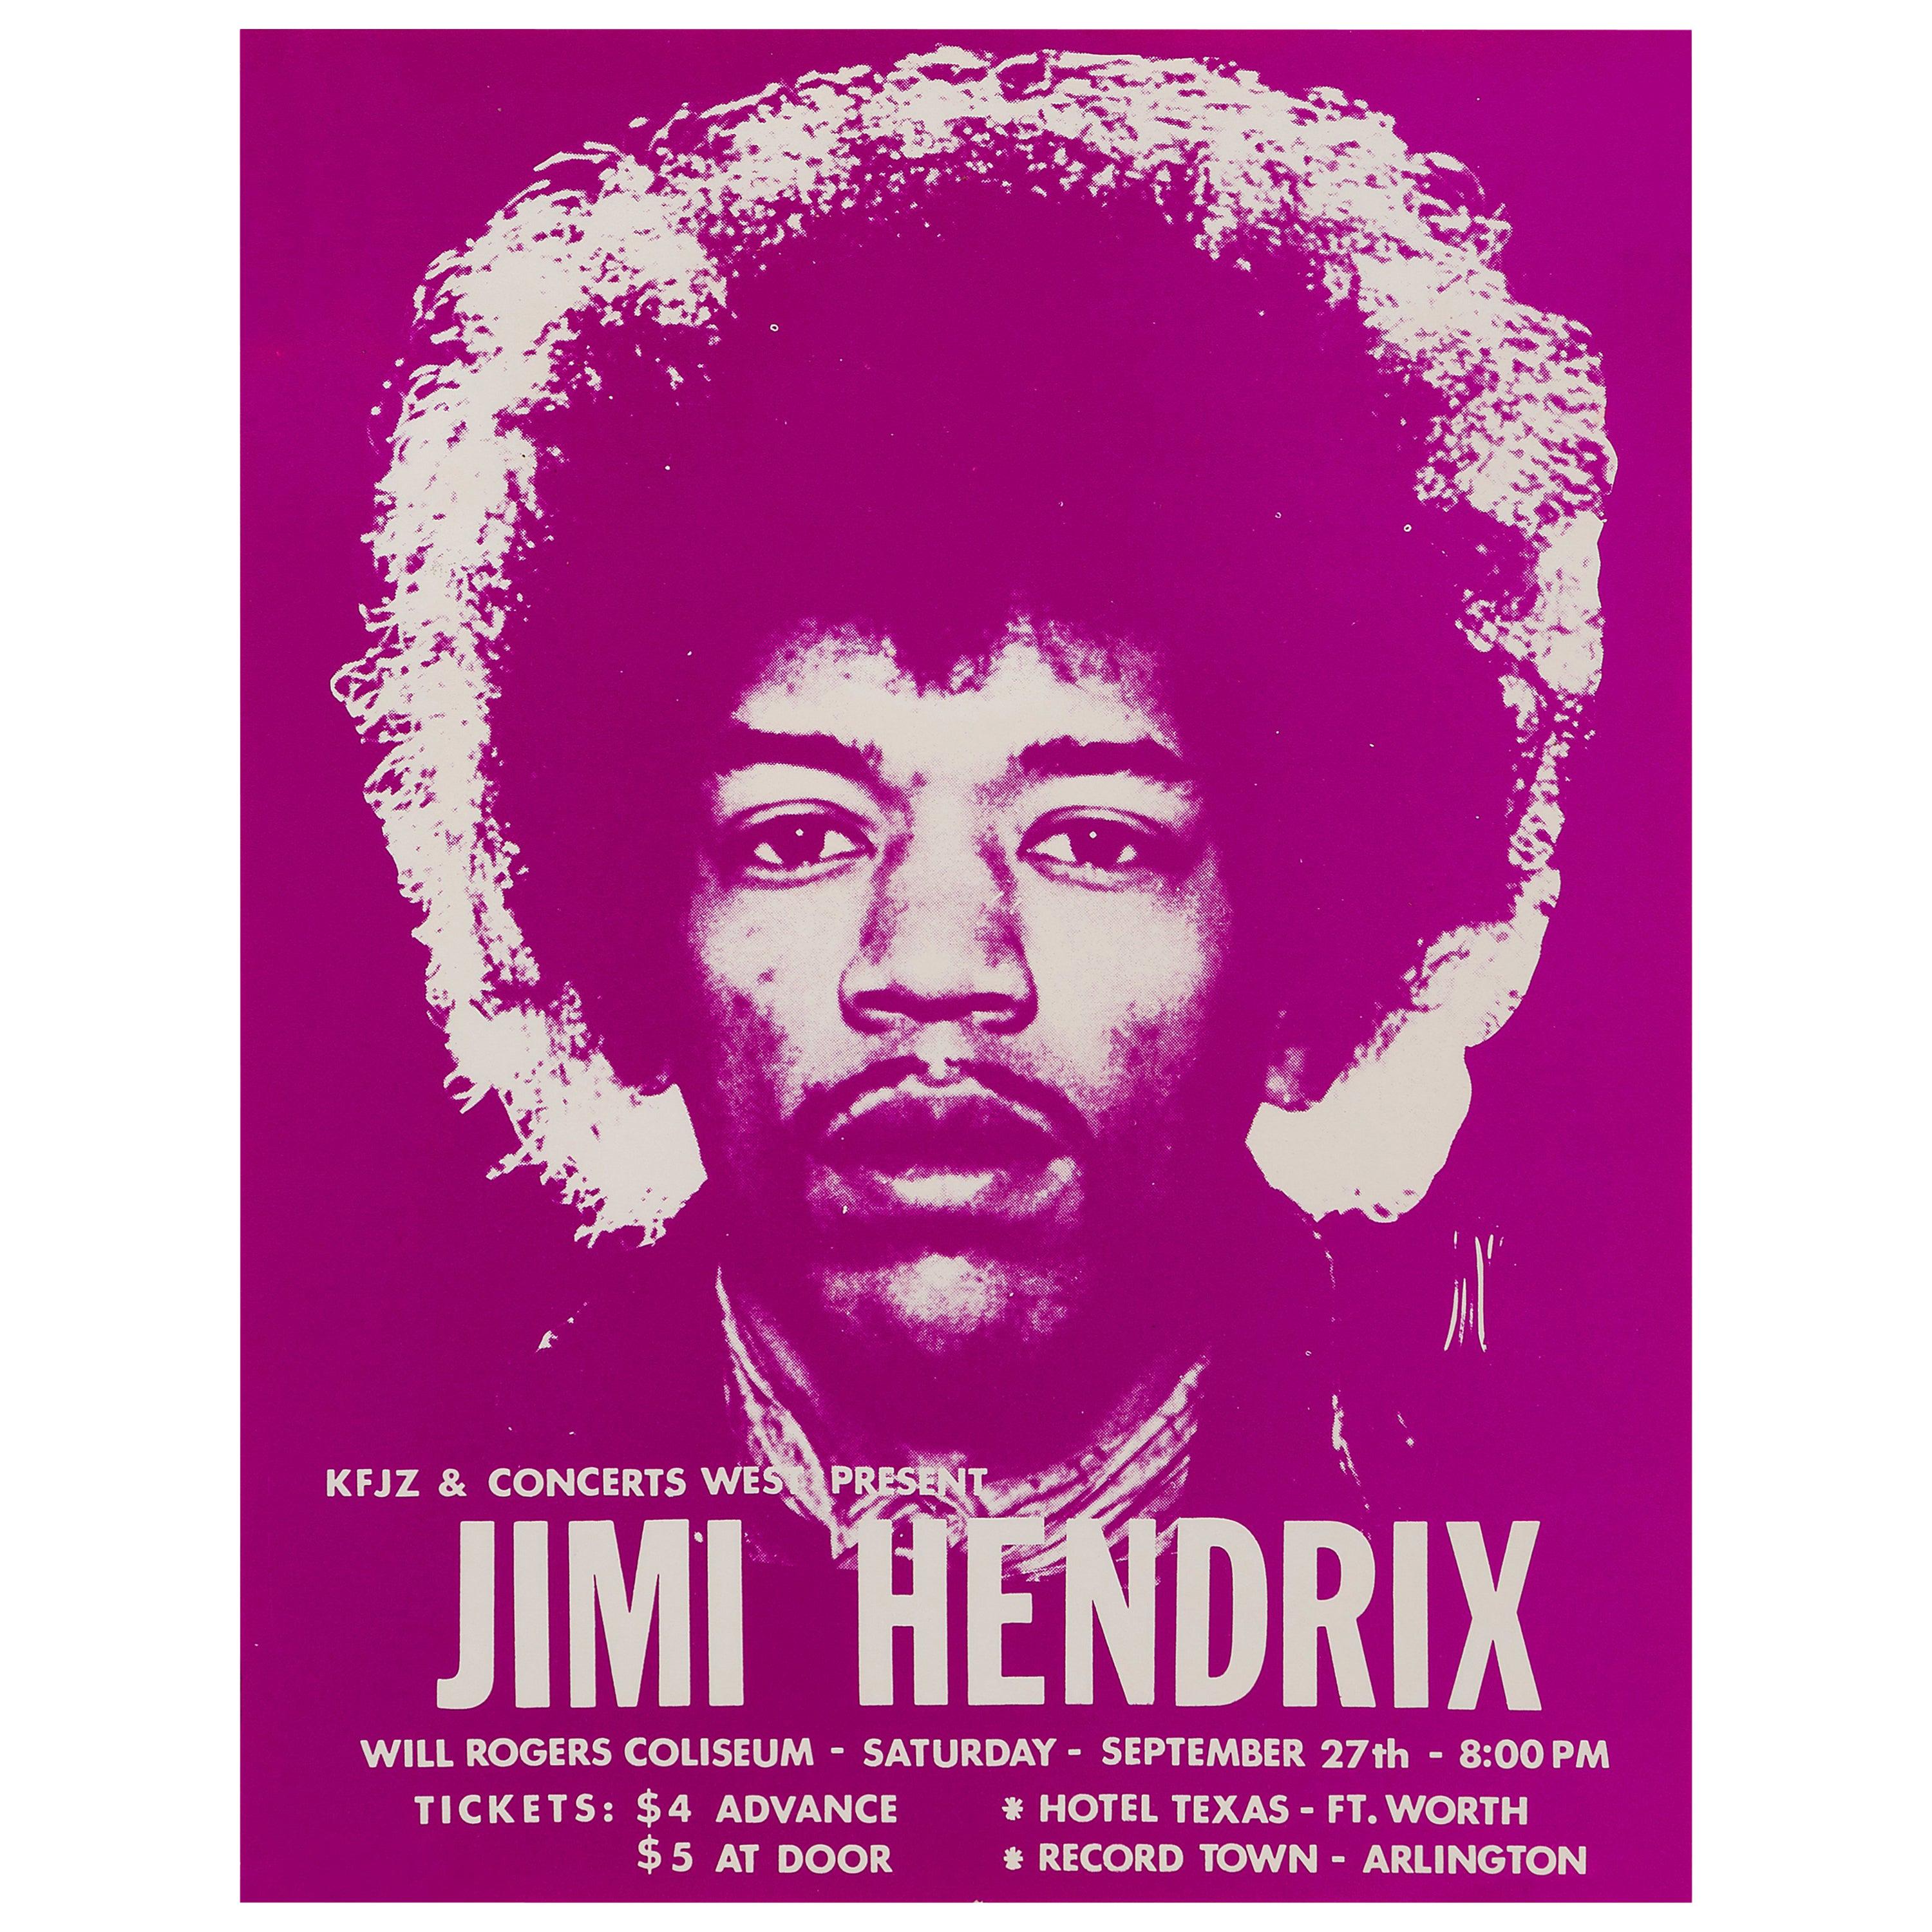 Jimi Hendrix Original Vintage Concert Handbill Poster, Ft. Worth, Texas, 1969